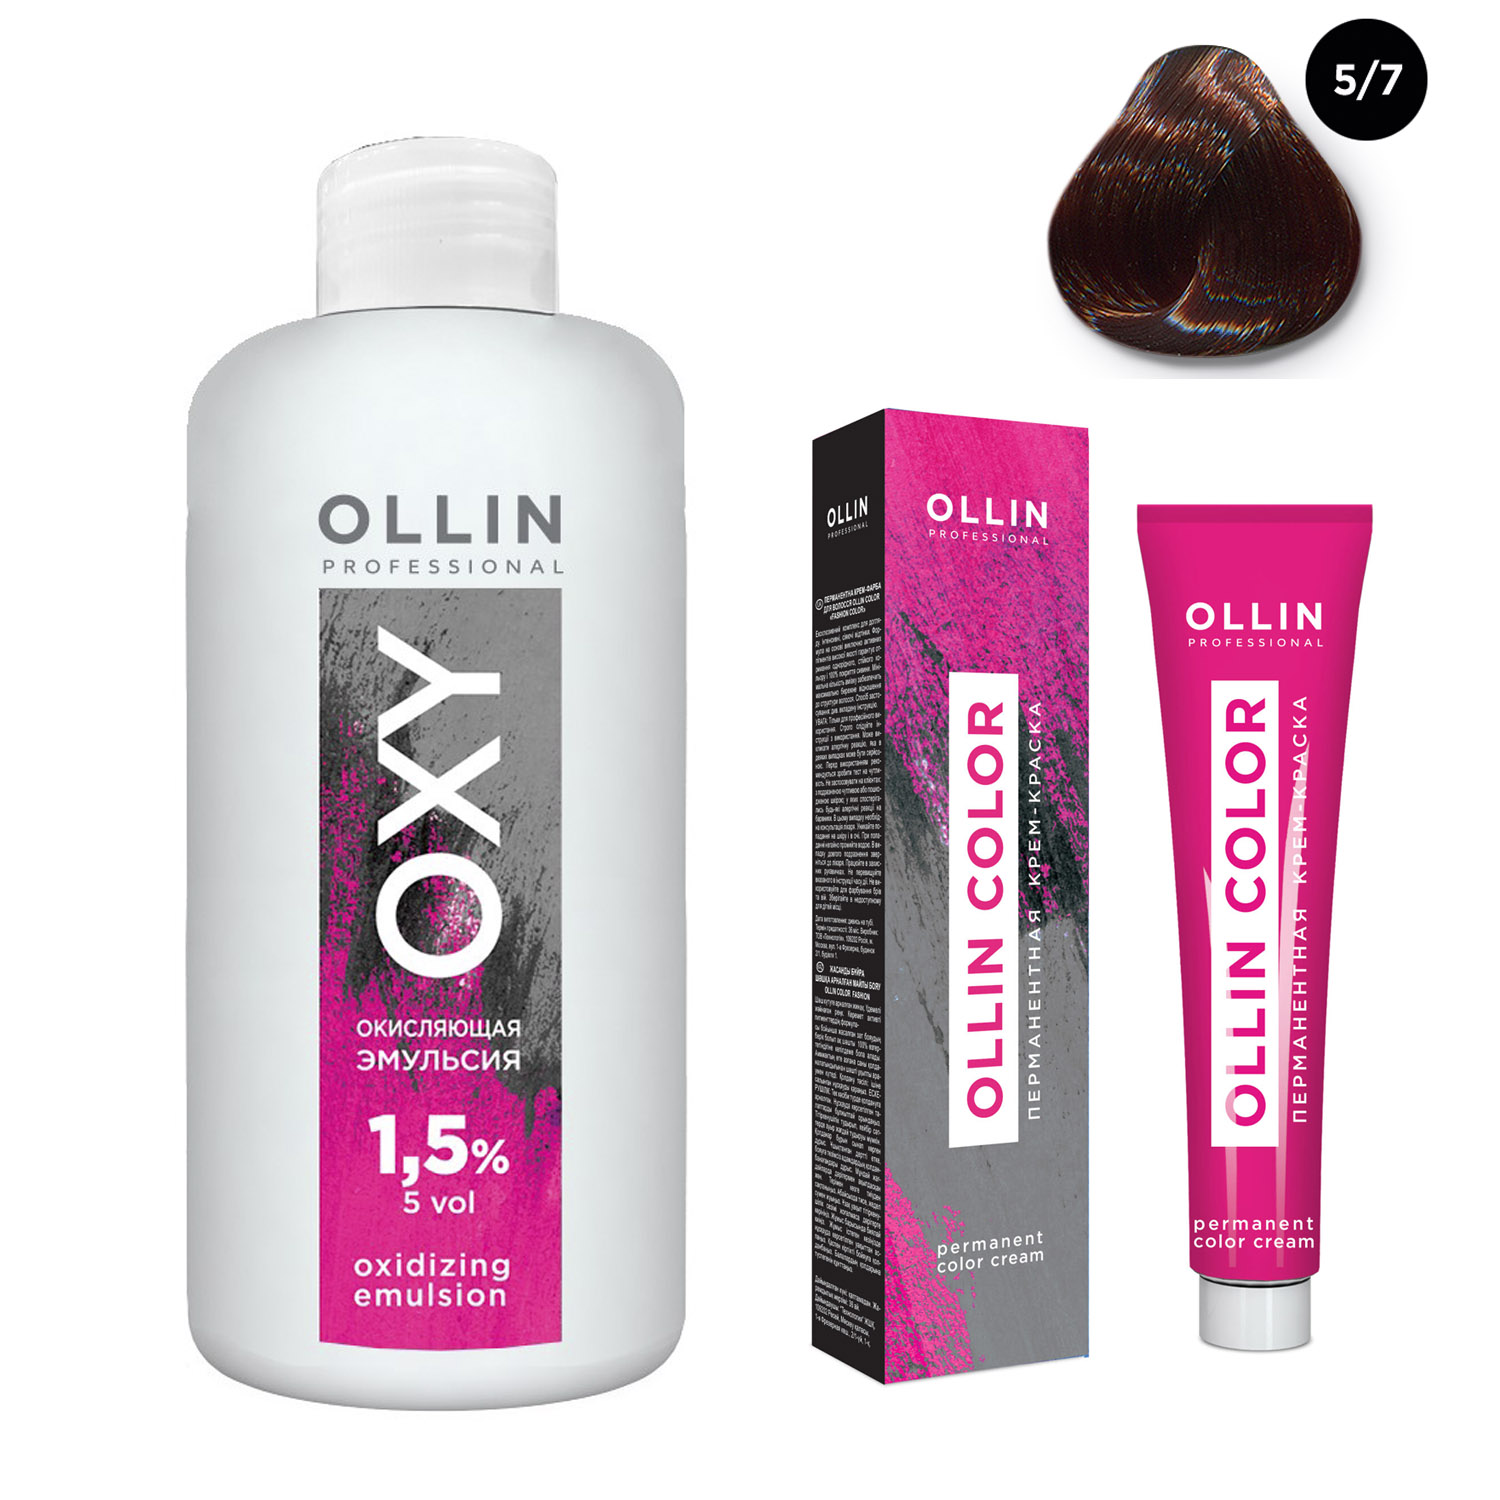 Ollin Professional Набор Перманентная крем-краска для волос Ollin Color оттенок 5/7 светлый шатен коричневый 100 мл + Окисляющая эмульсия Oxy 1,5% 150 мл (Ollin Professional, Ollin Color)